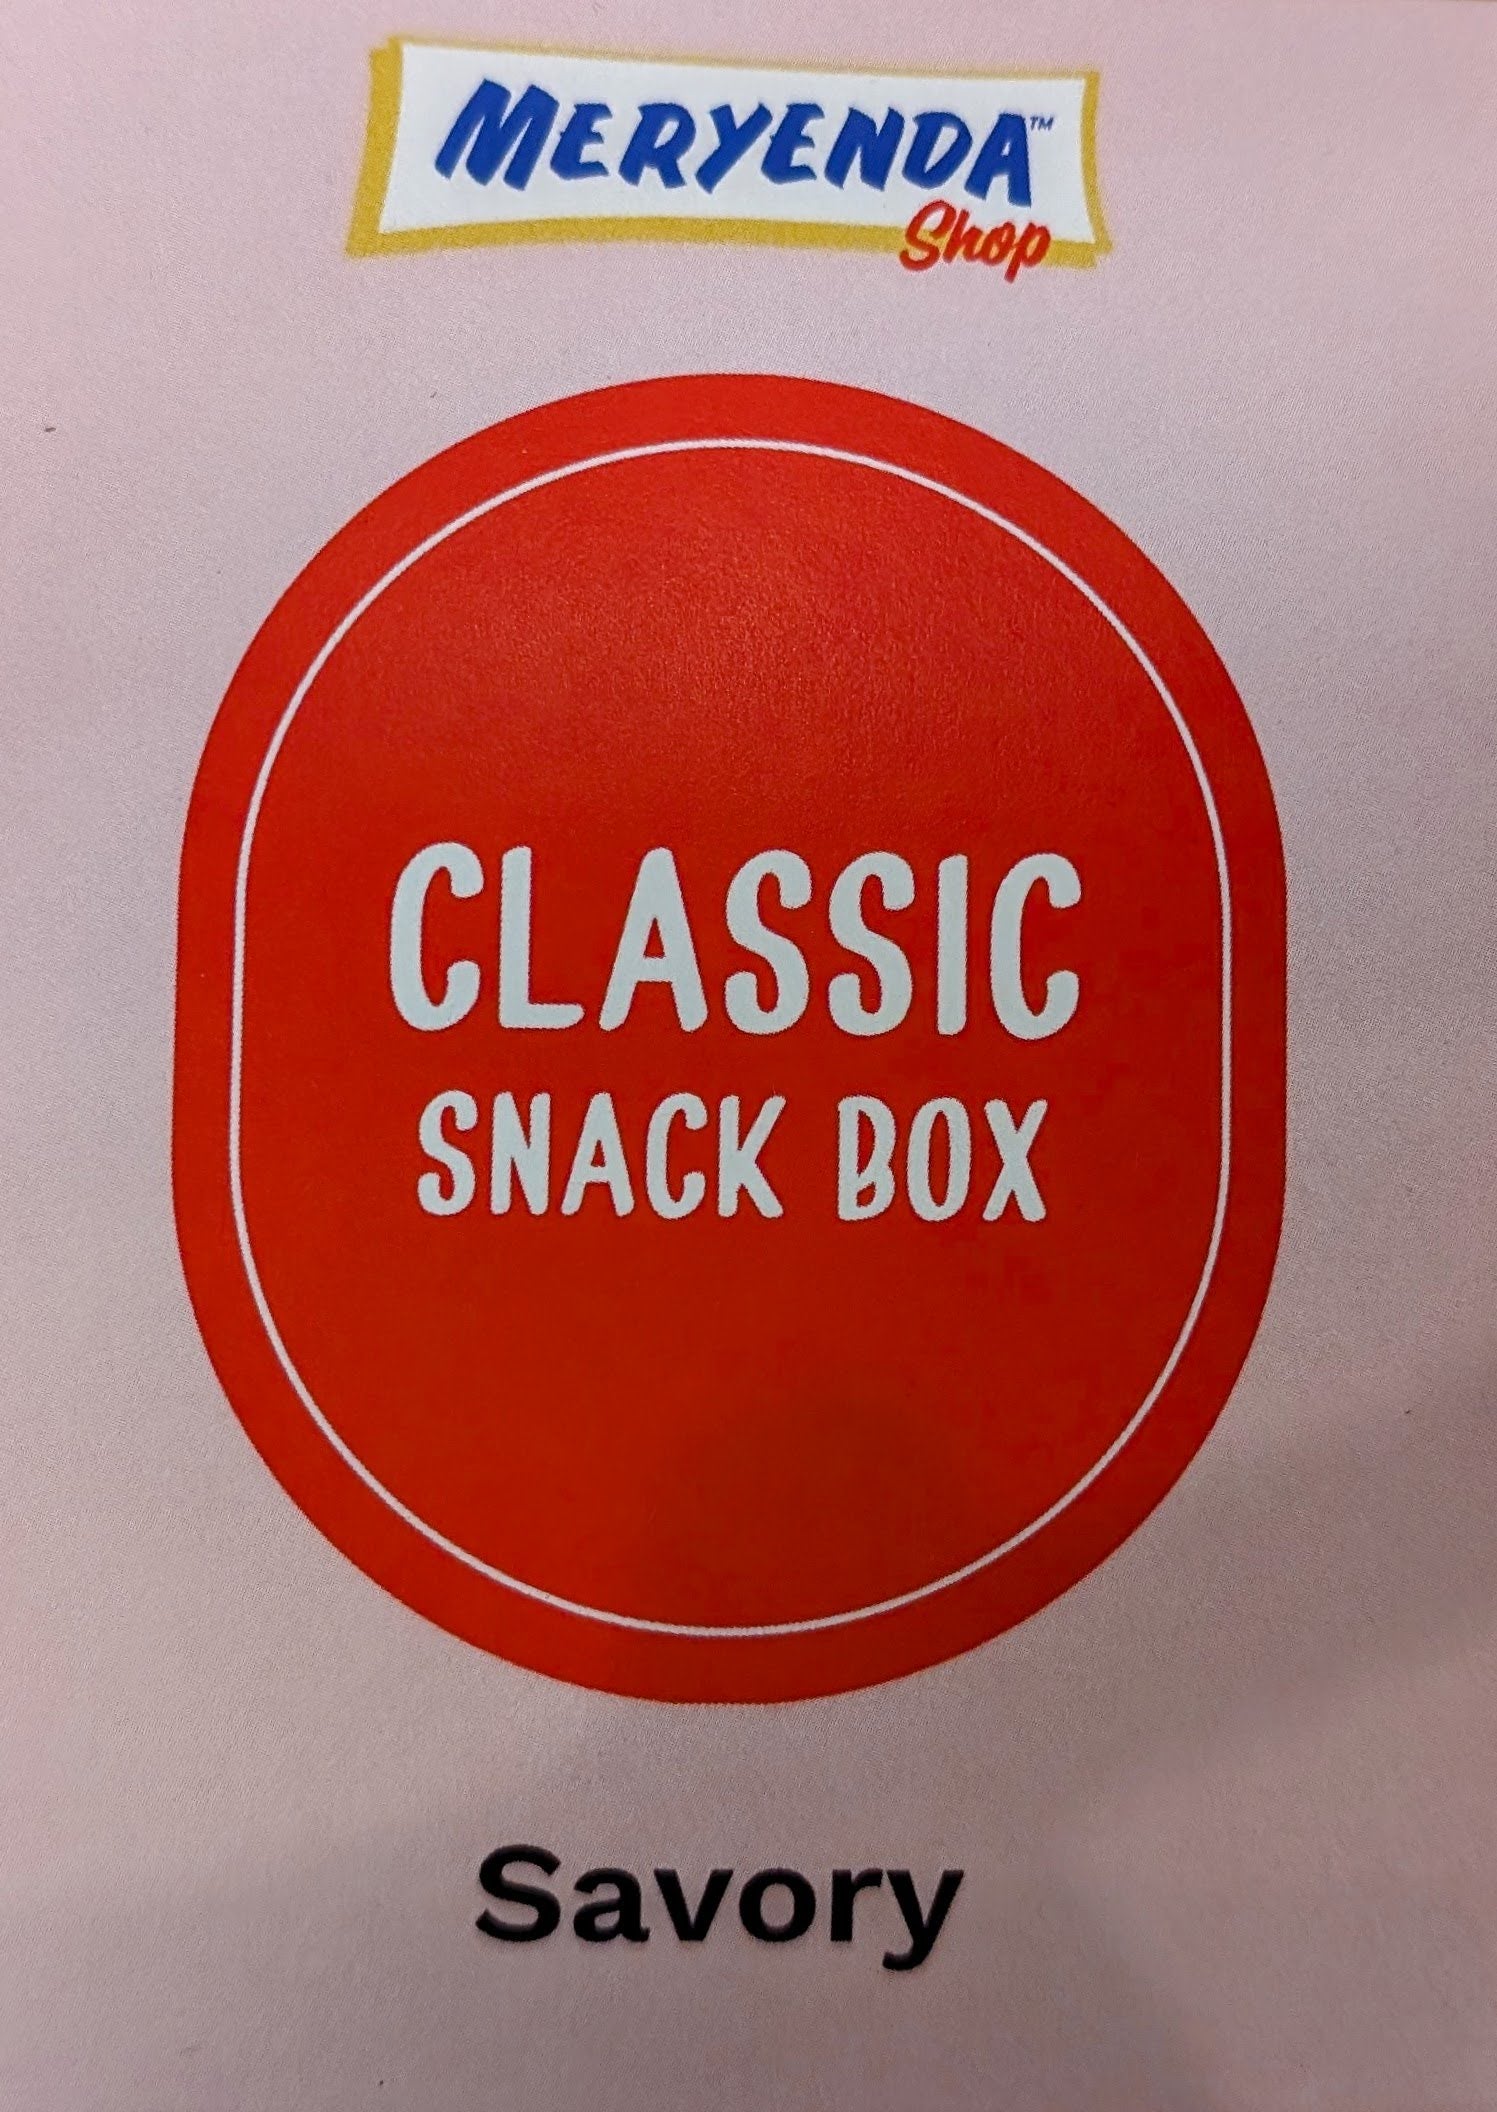 Meryenda Shop Classic Snack Boxes